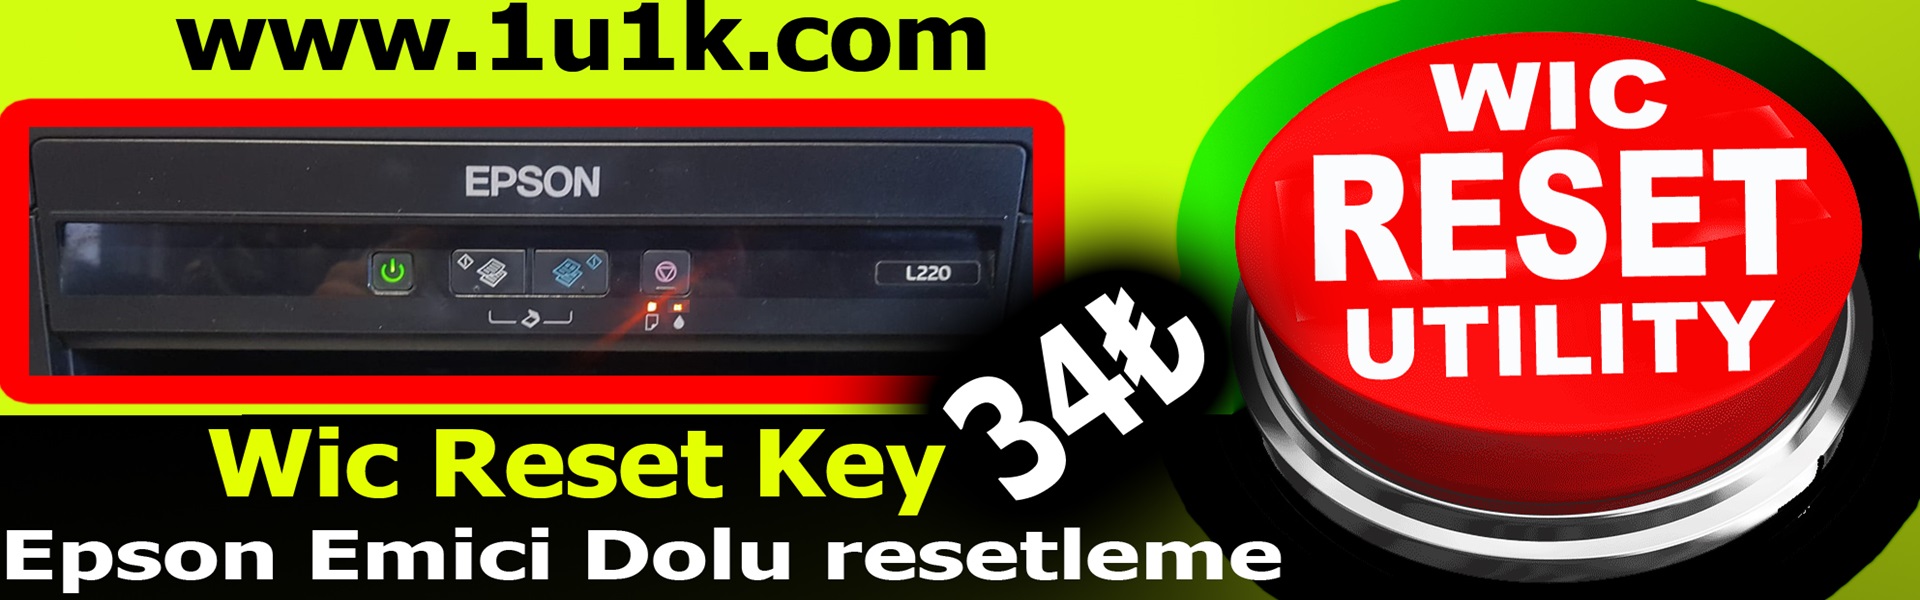 Wic Reset Key 34 TL wicReset Key sipariş 1u1k.com